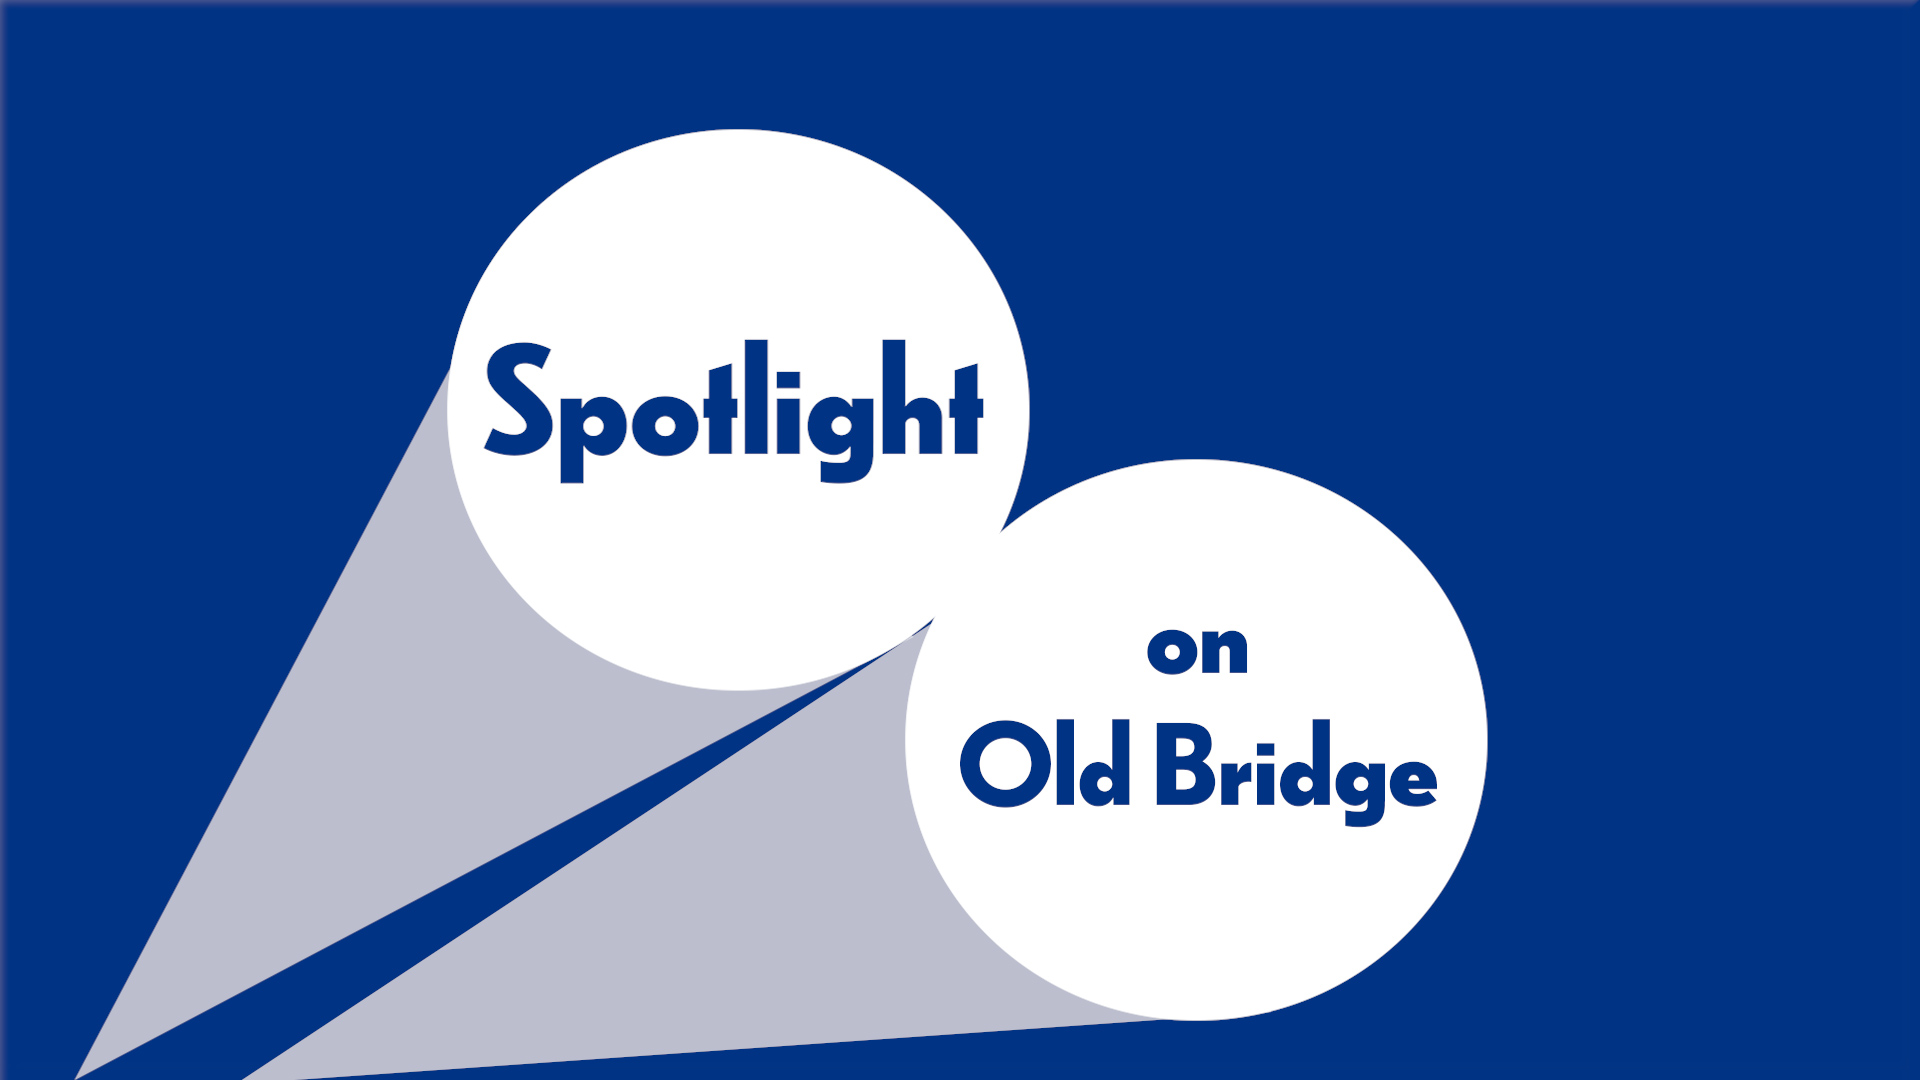 Spotlight on Old Bridge